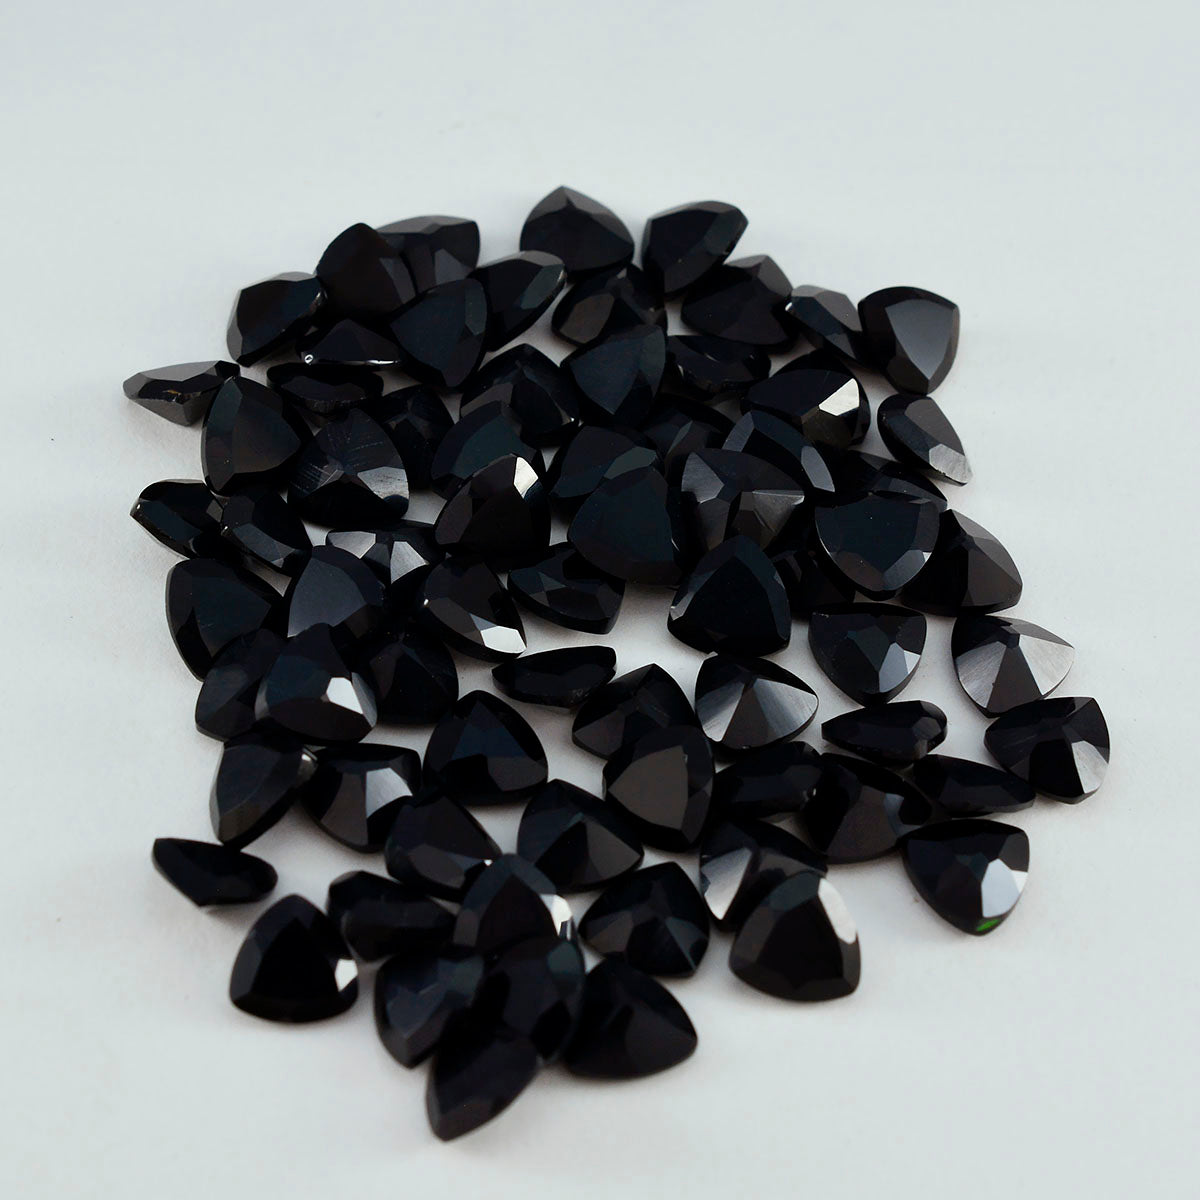 Riyogems 1PC Natural Black Onyx Faceted 7x7 mm Trillion Shape Good Quality Stone